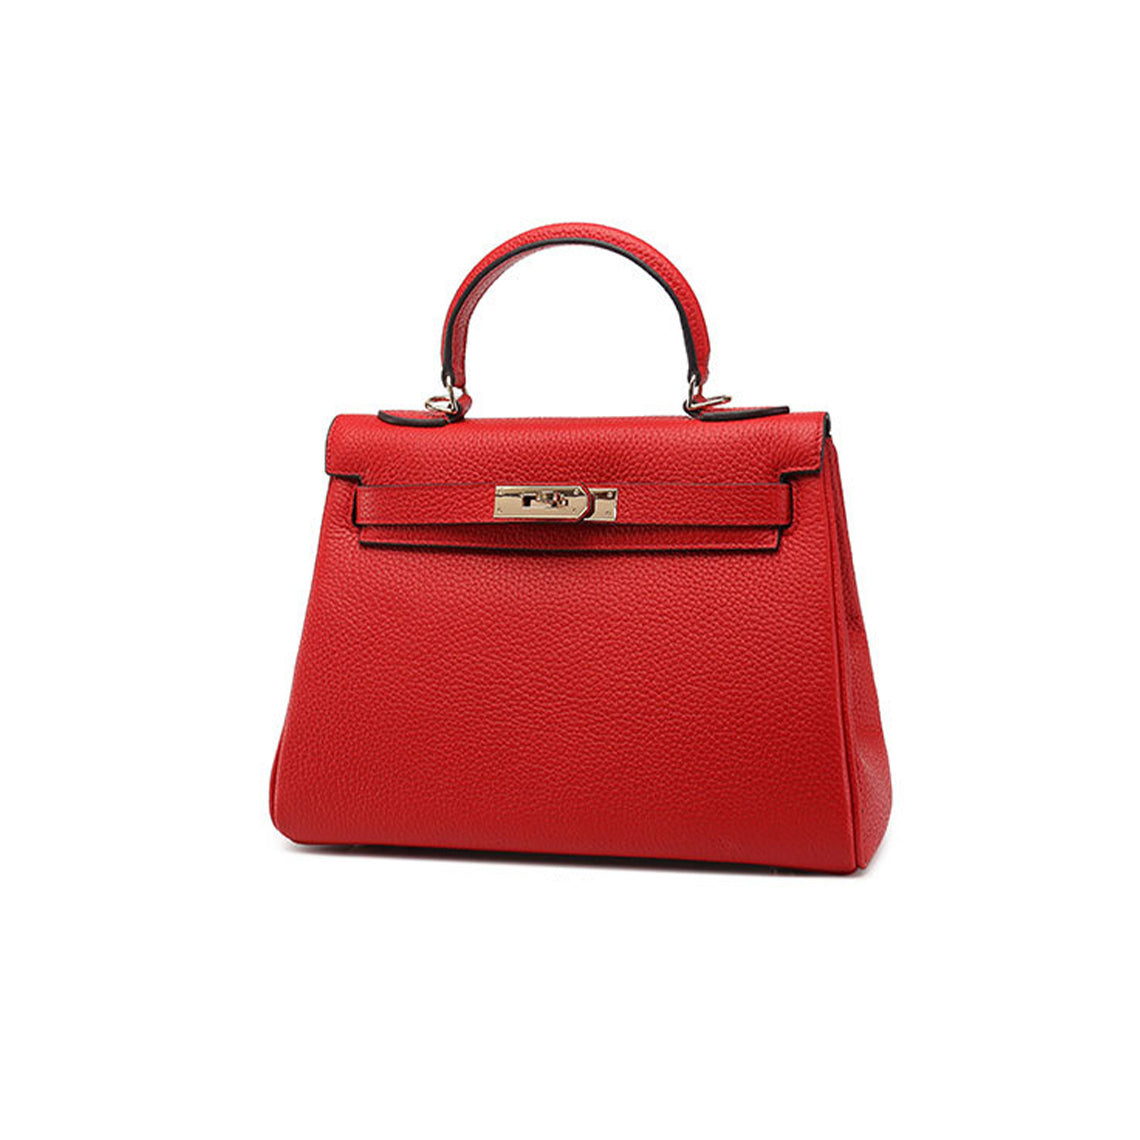 Designer Luxury Handbag | Red Leather Handbag - POPSEWING™